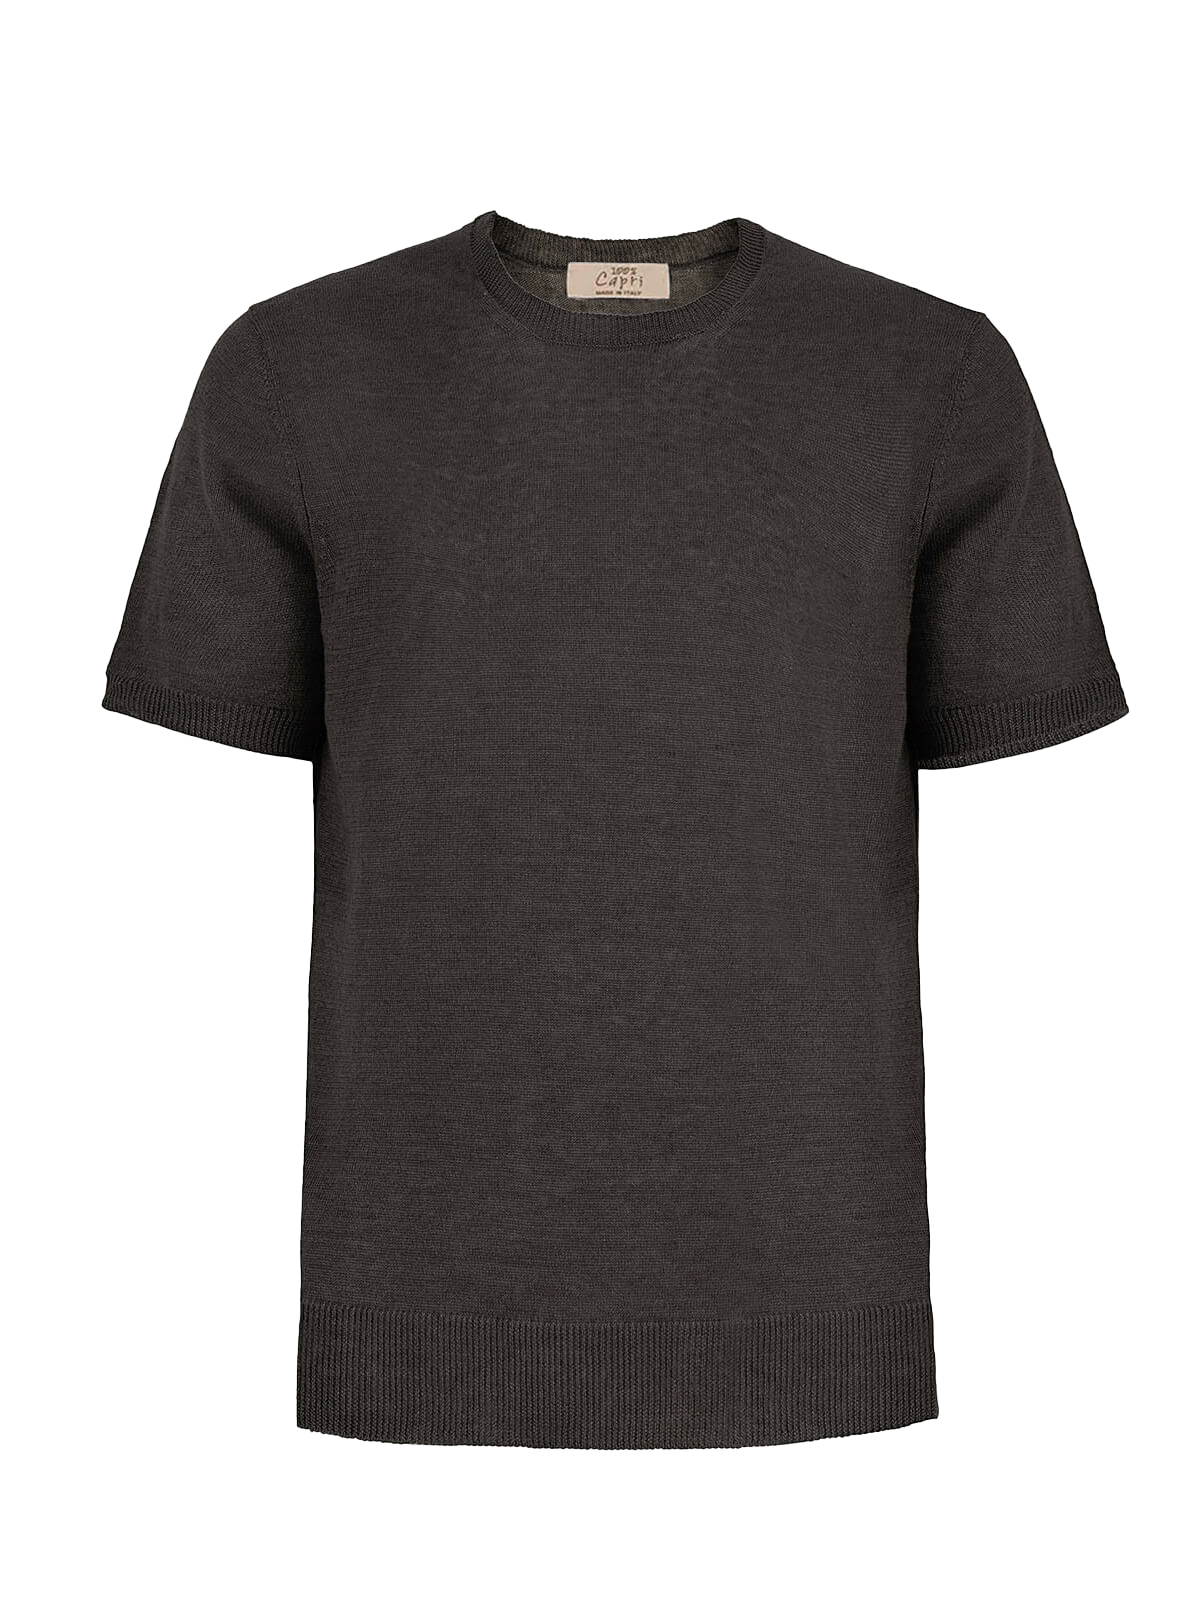 T-Shirt M/C 100% Capri dark grey linen t-shirt front